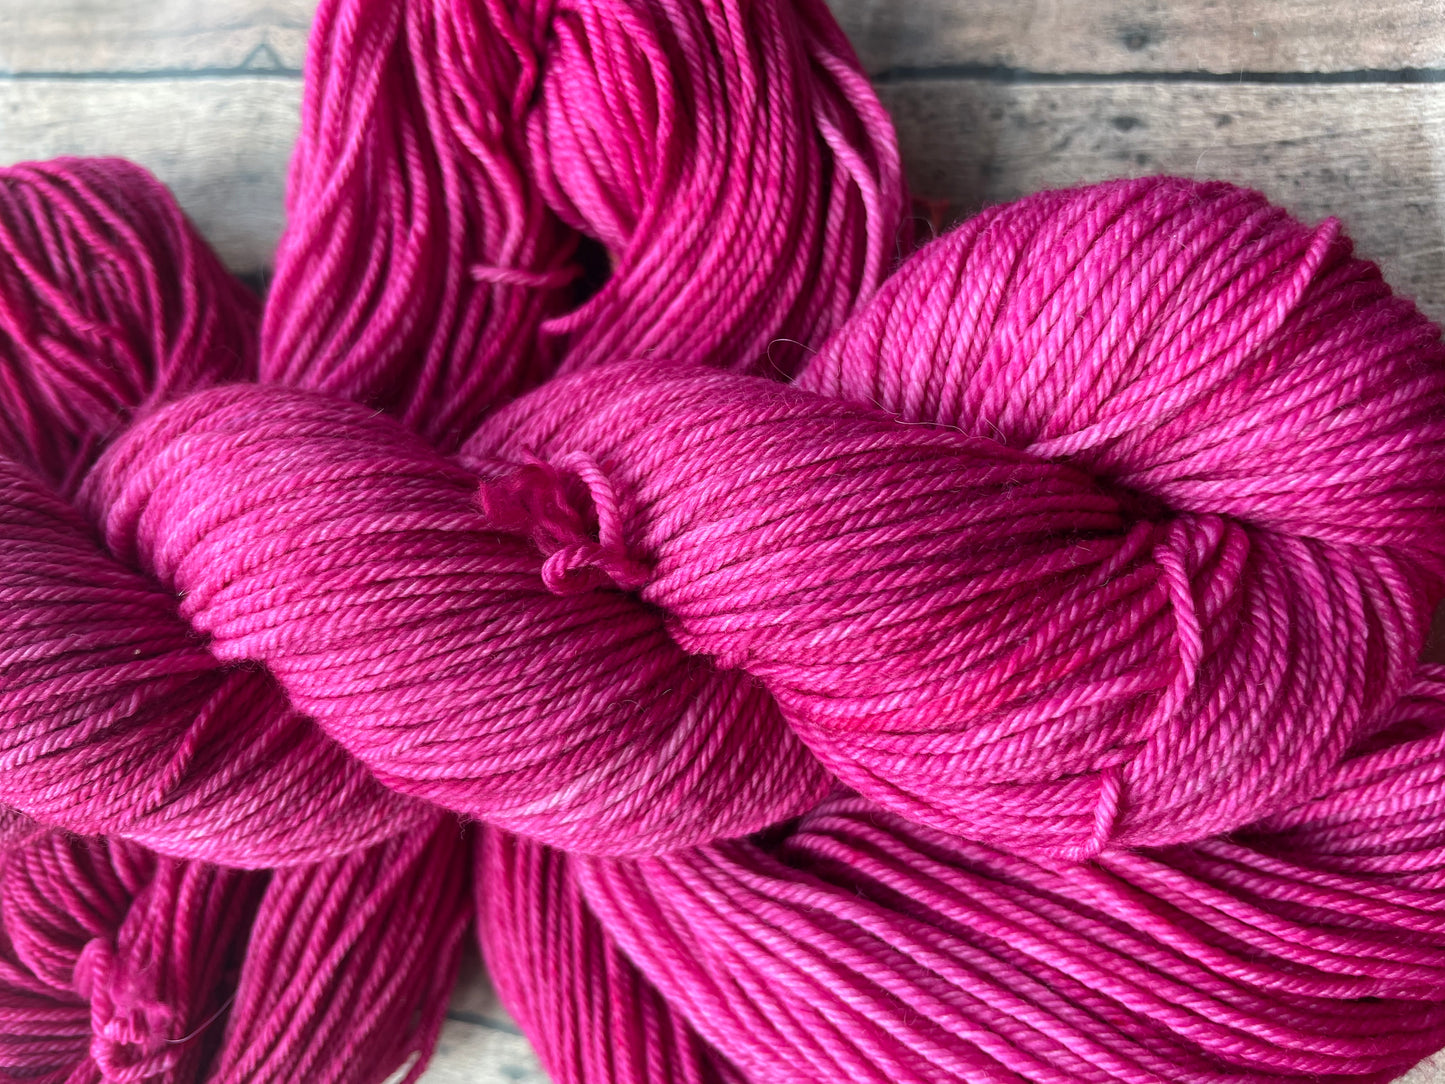 Razzle - Drizzy DK - hand dyed yarn